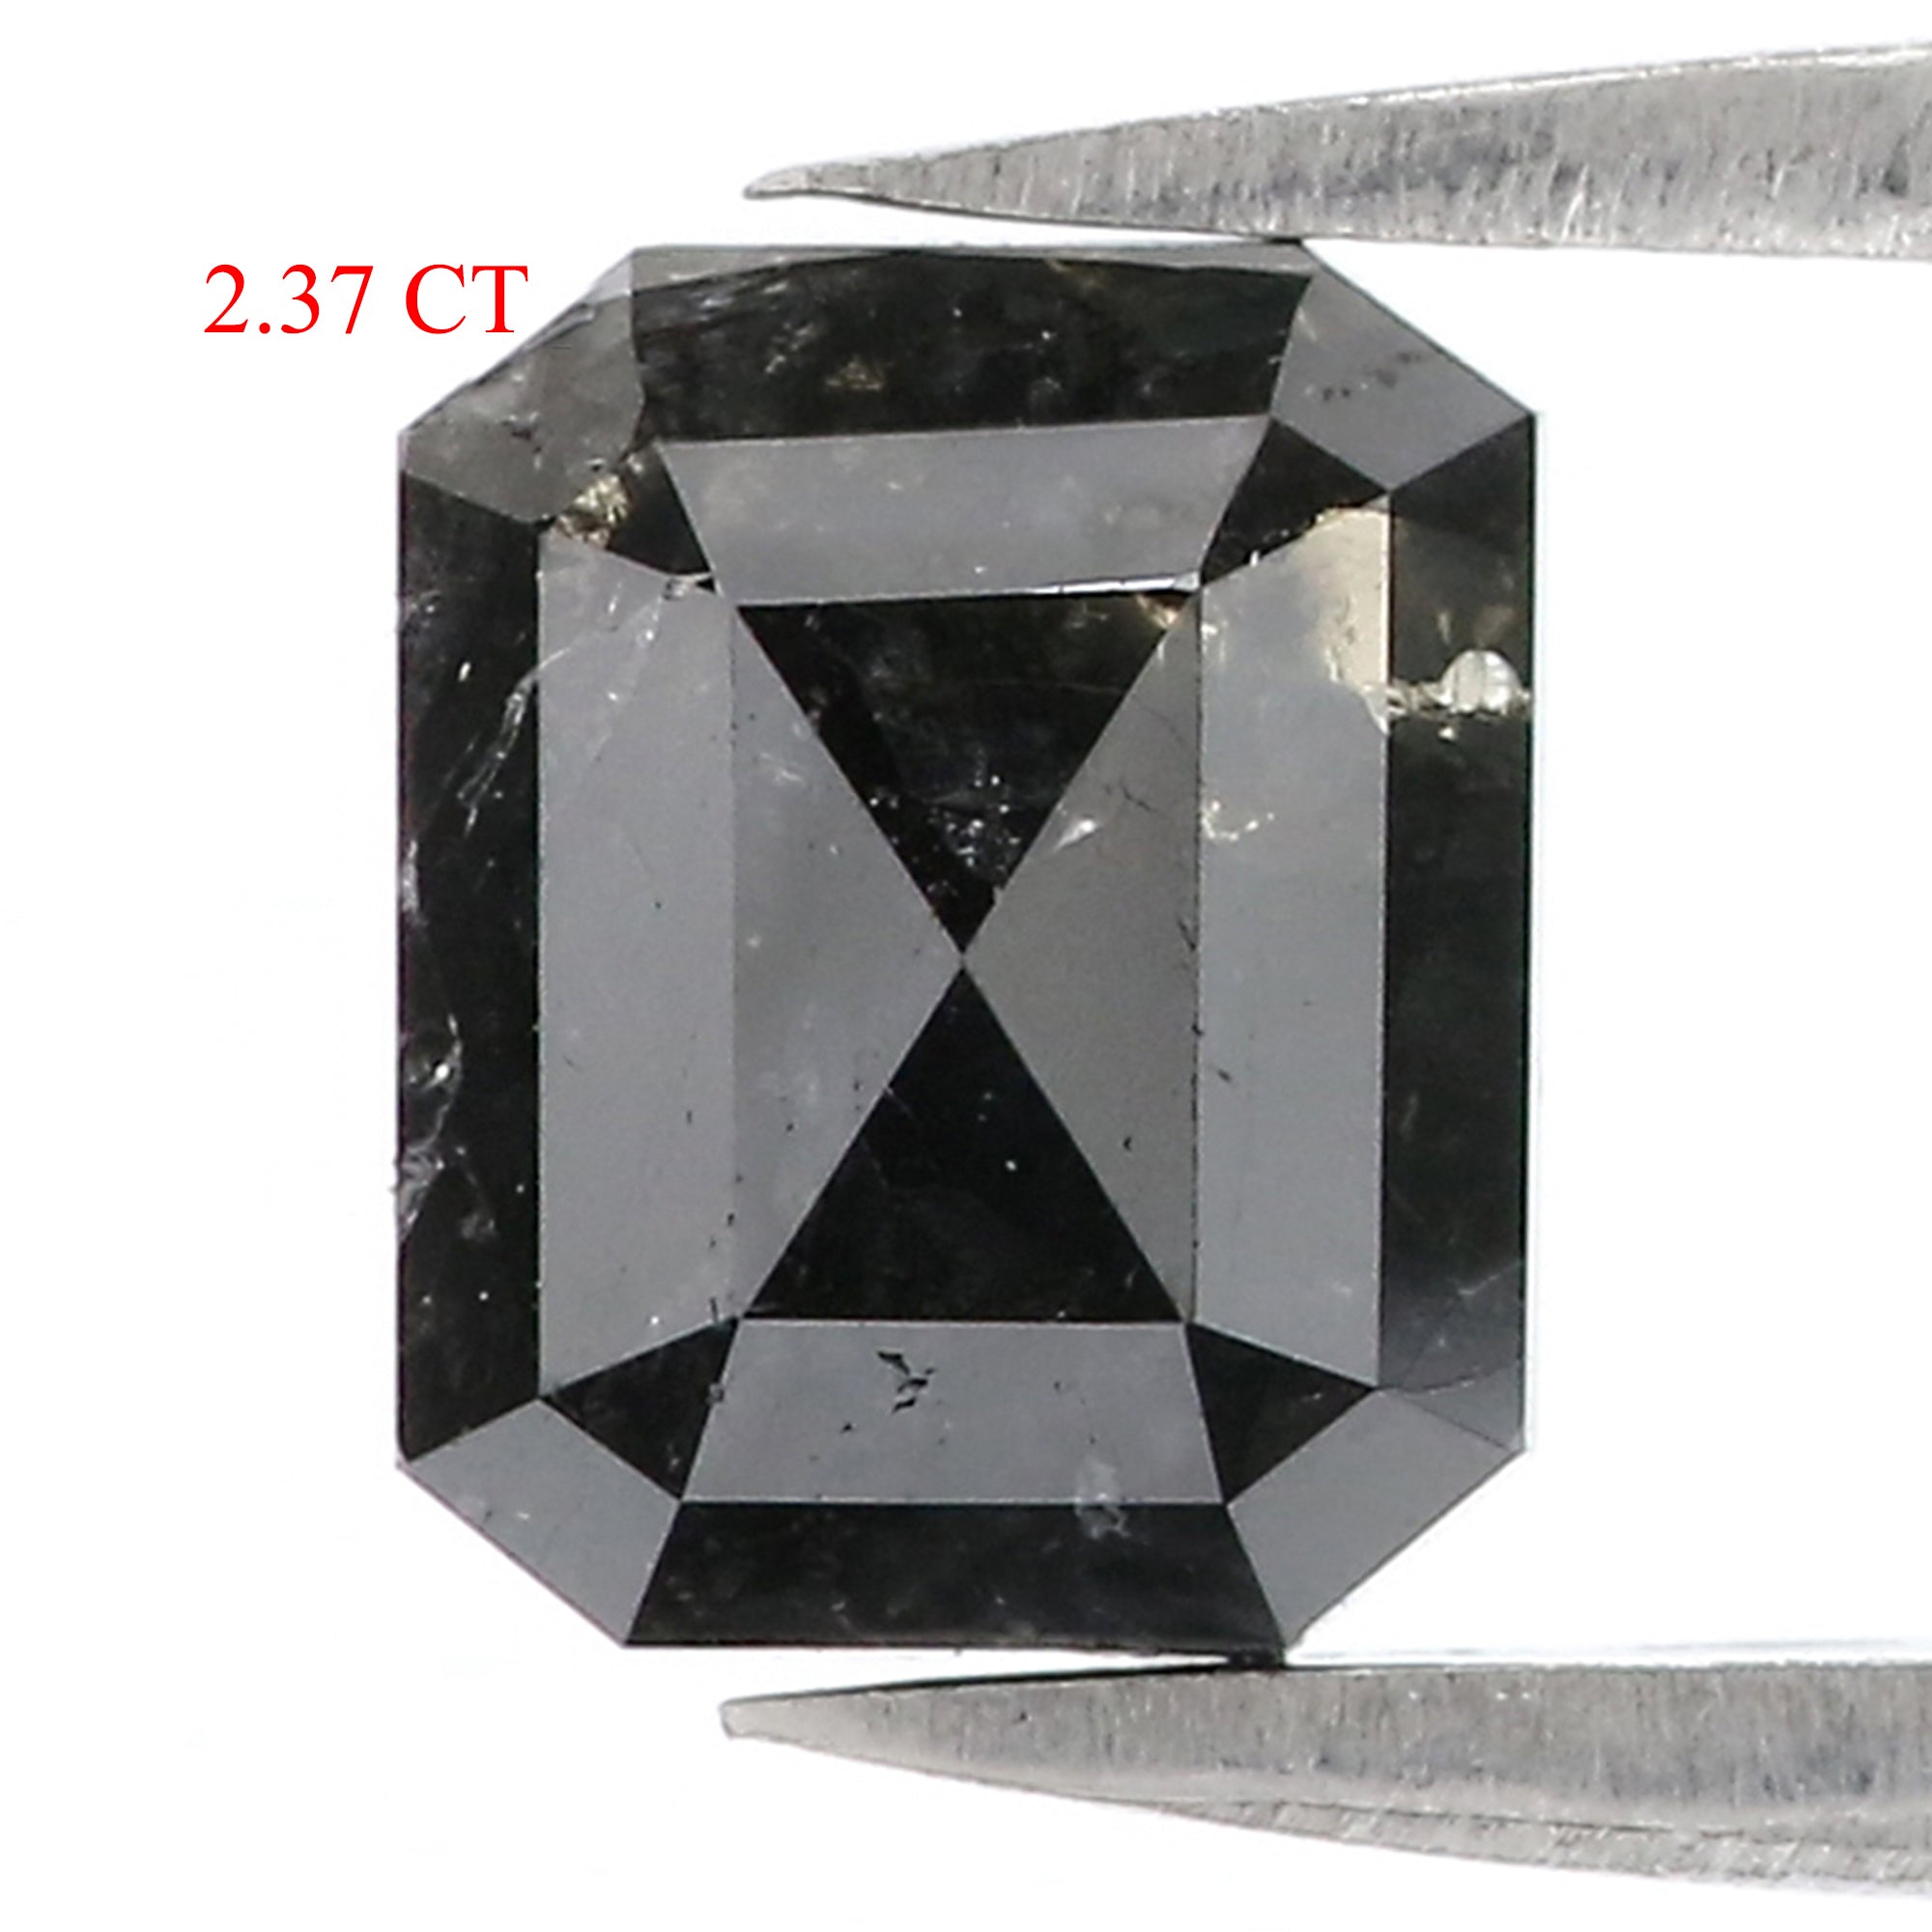 2.37 CT Natural Loose Emerald Shape Diamond Salt And Pepper Emerald Cut Diamond 6.54 MM Natural Loose Black Emerald Rose Cut Diamond QL7322